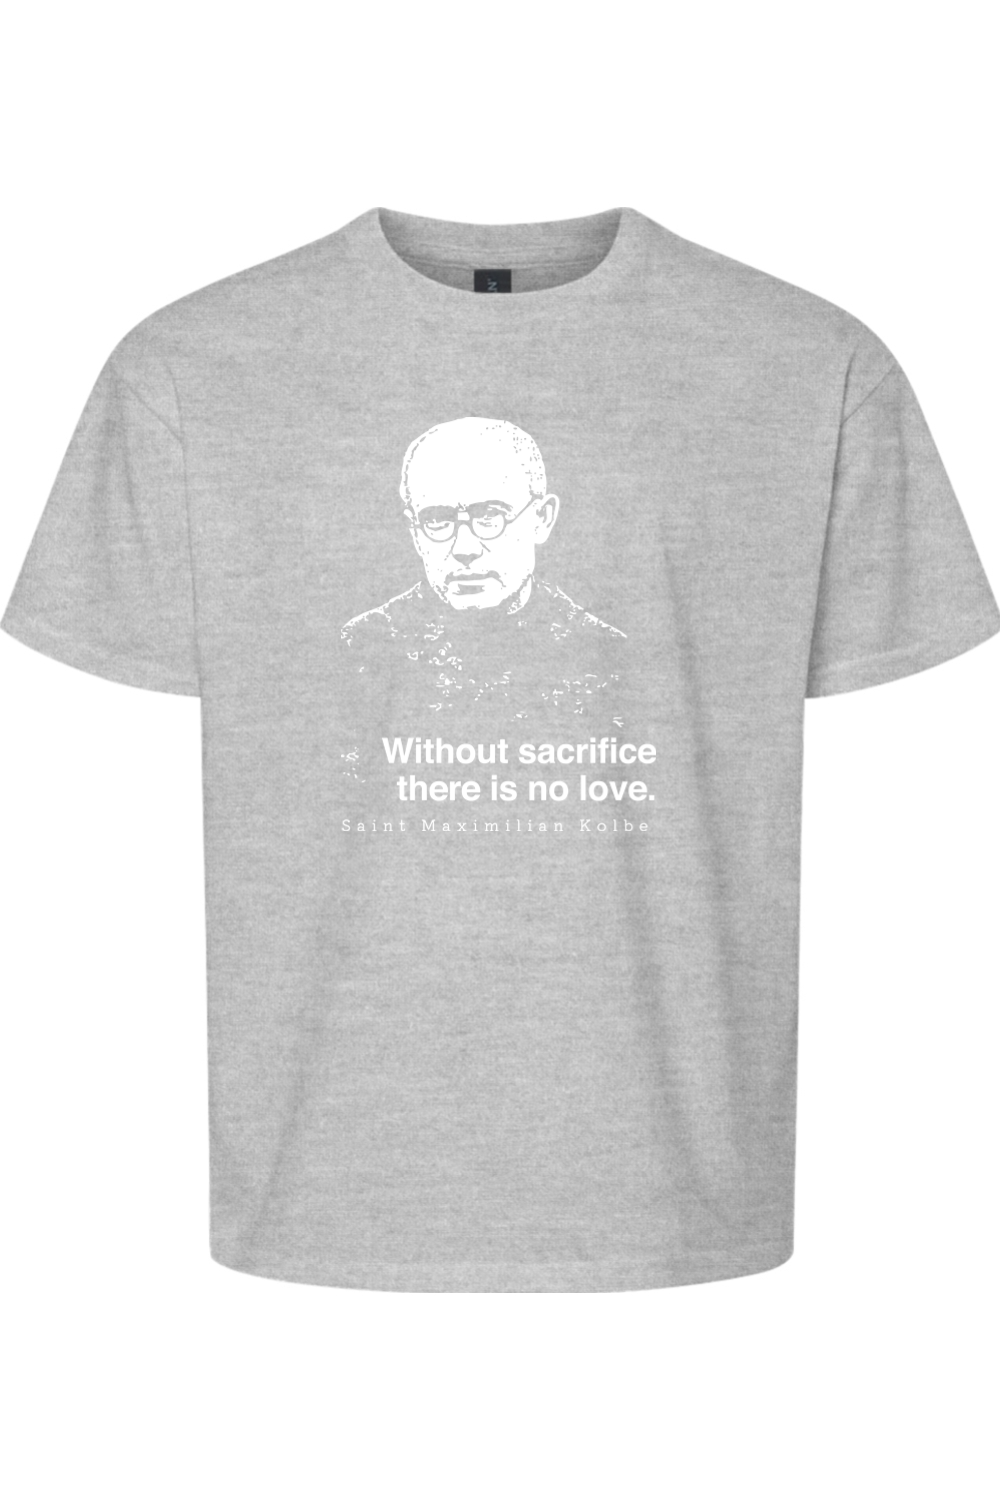 Without Sacrifice - St. Maximilian Kolbe Youth T-Shirt